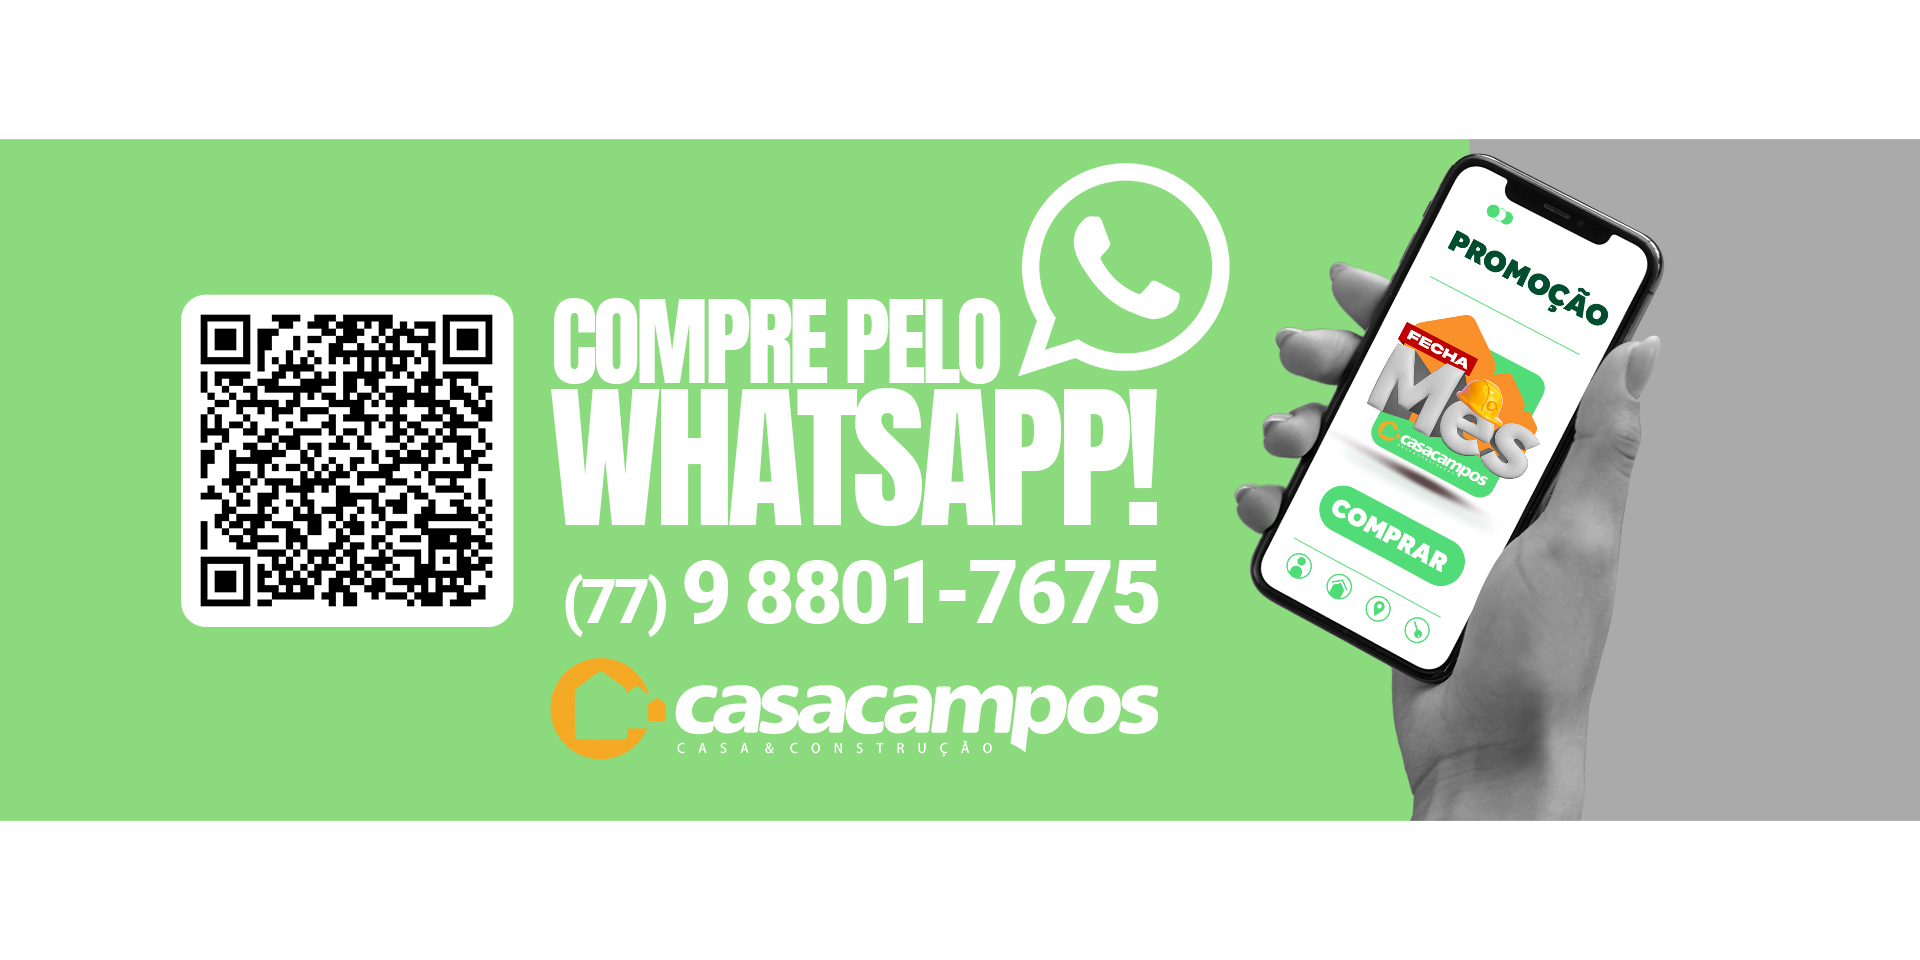 Compre pelo whatsapp Casa Campos!